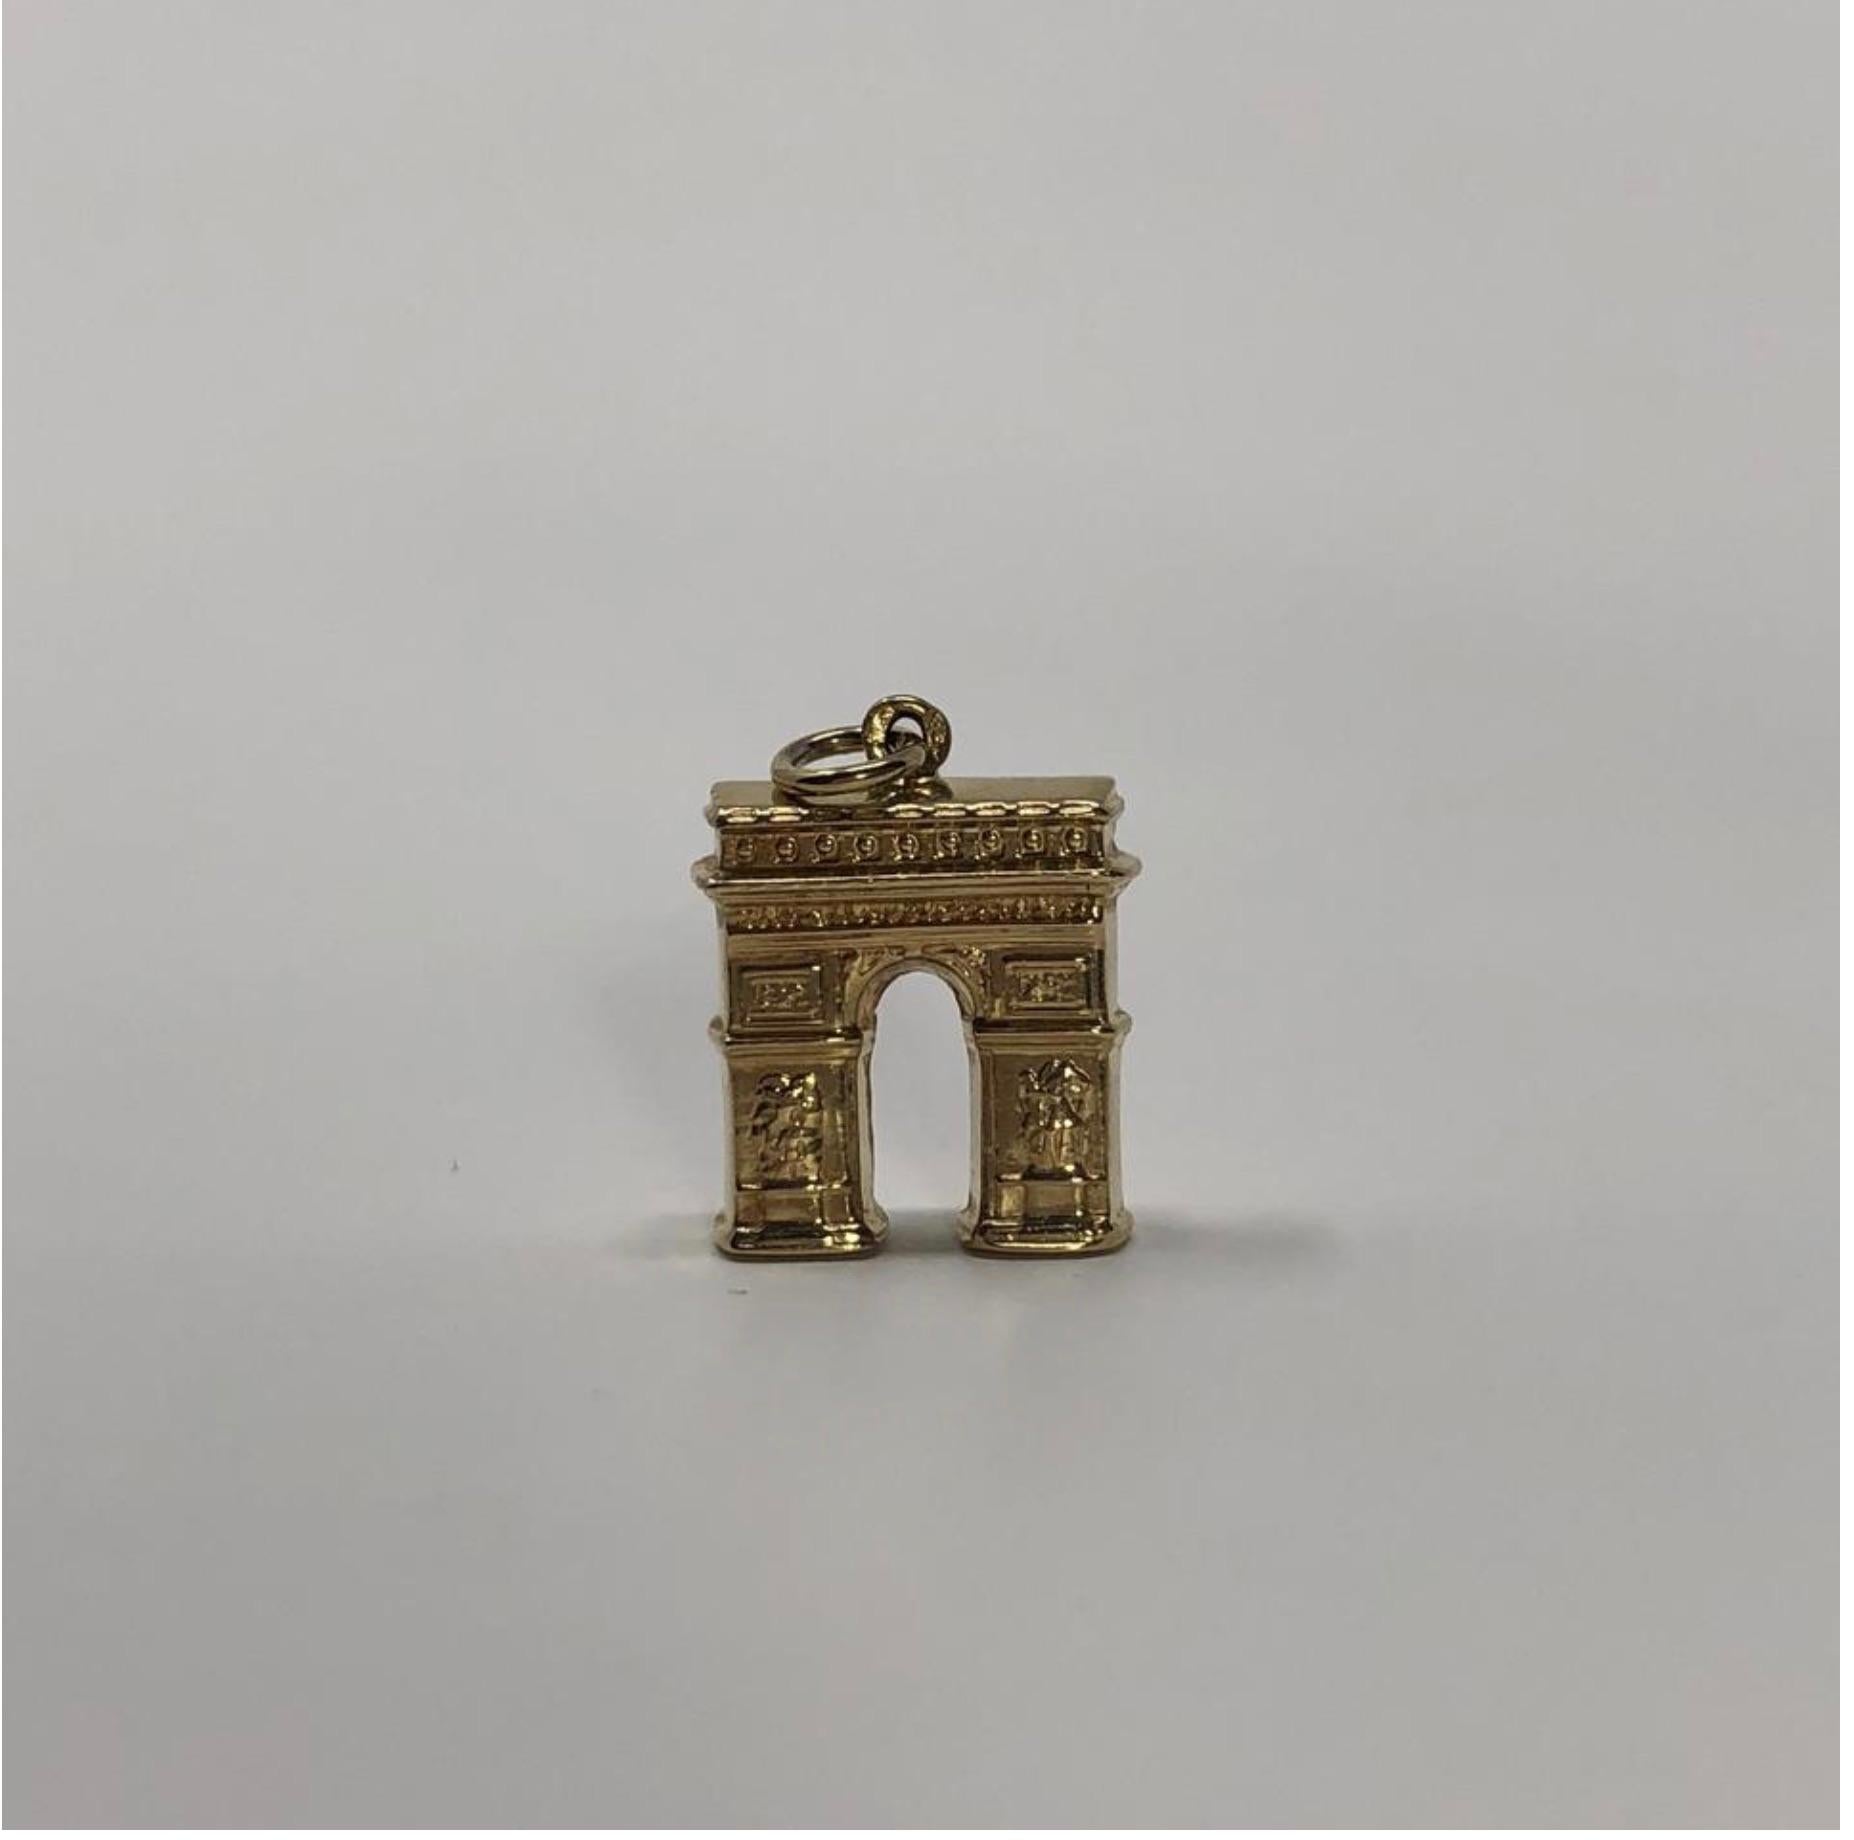 MODEL - Vintage 18k Gold Arch De Triompe Paris Pendant Charm

CONDITION - Exceptional! No signs of wear.

SKU - 2367-FL

ORIGINAL RETAIL PRICE - 250 + tax

MATERIAL - 18k Gold

WEIGHT - 1.5 grams

DIMENSIONS - L.5 x H.65 (.75 with bail) x D.2

COMES